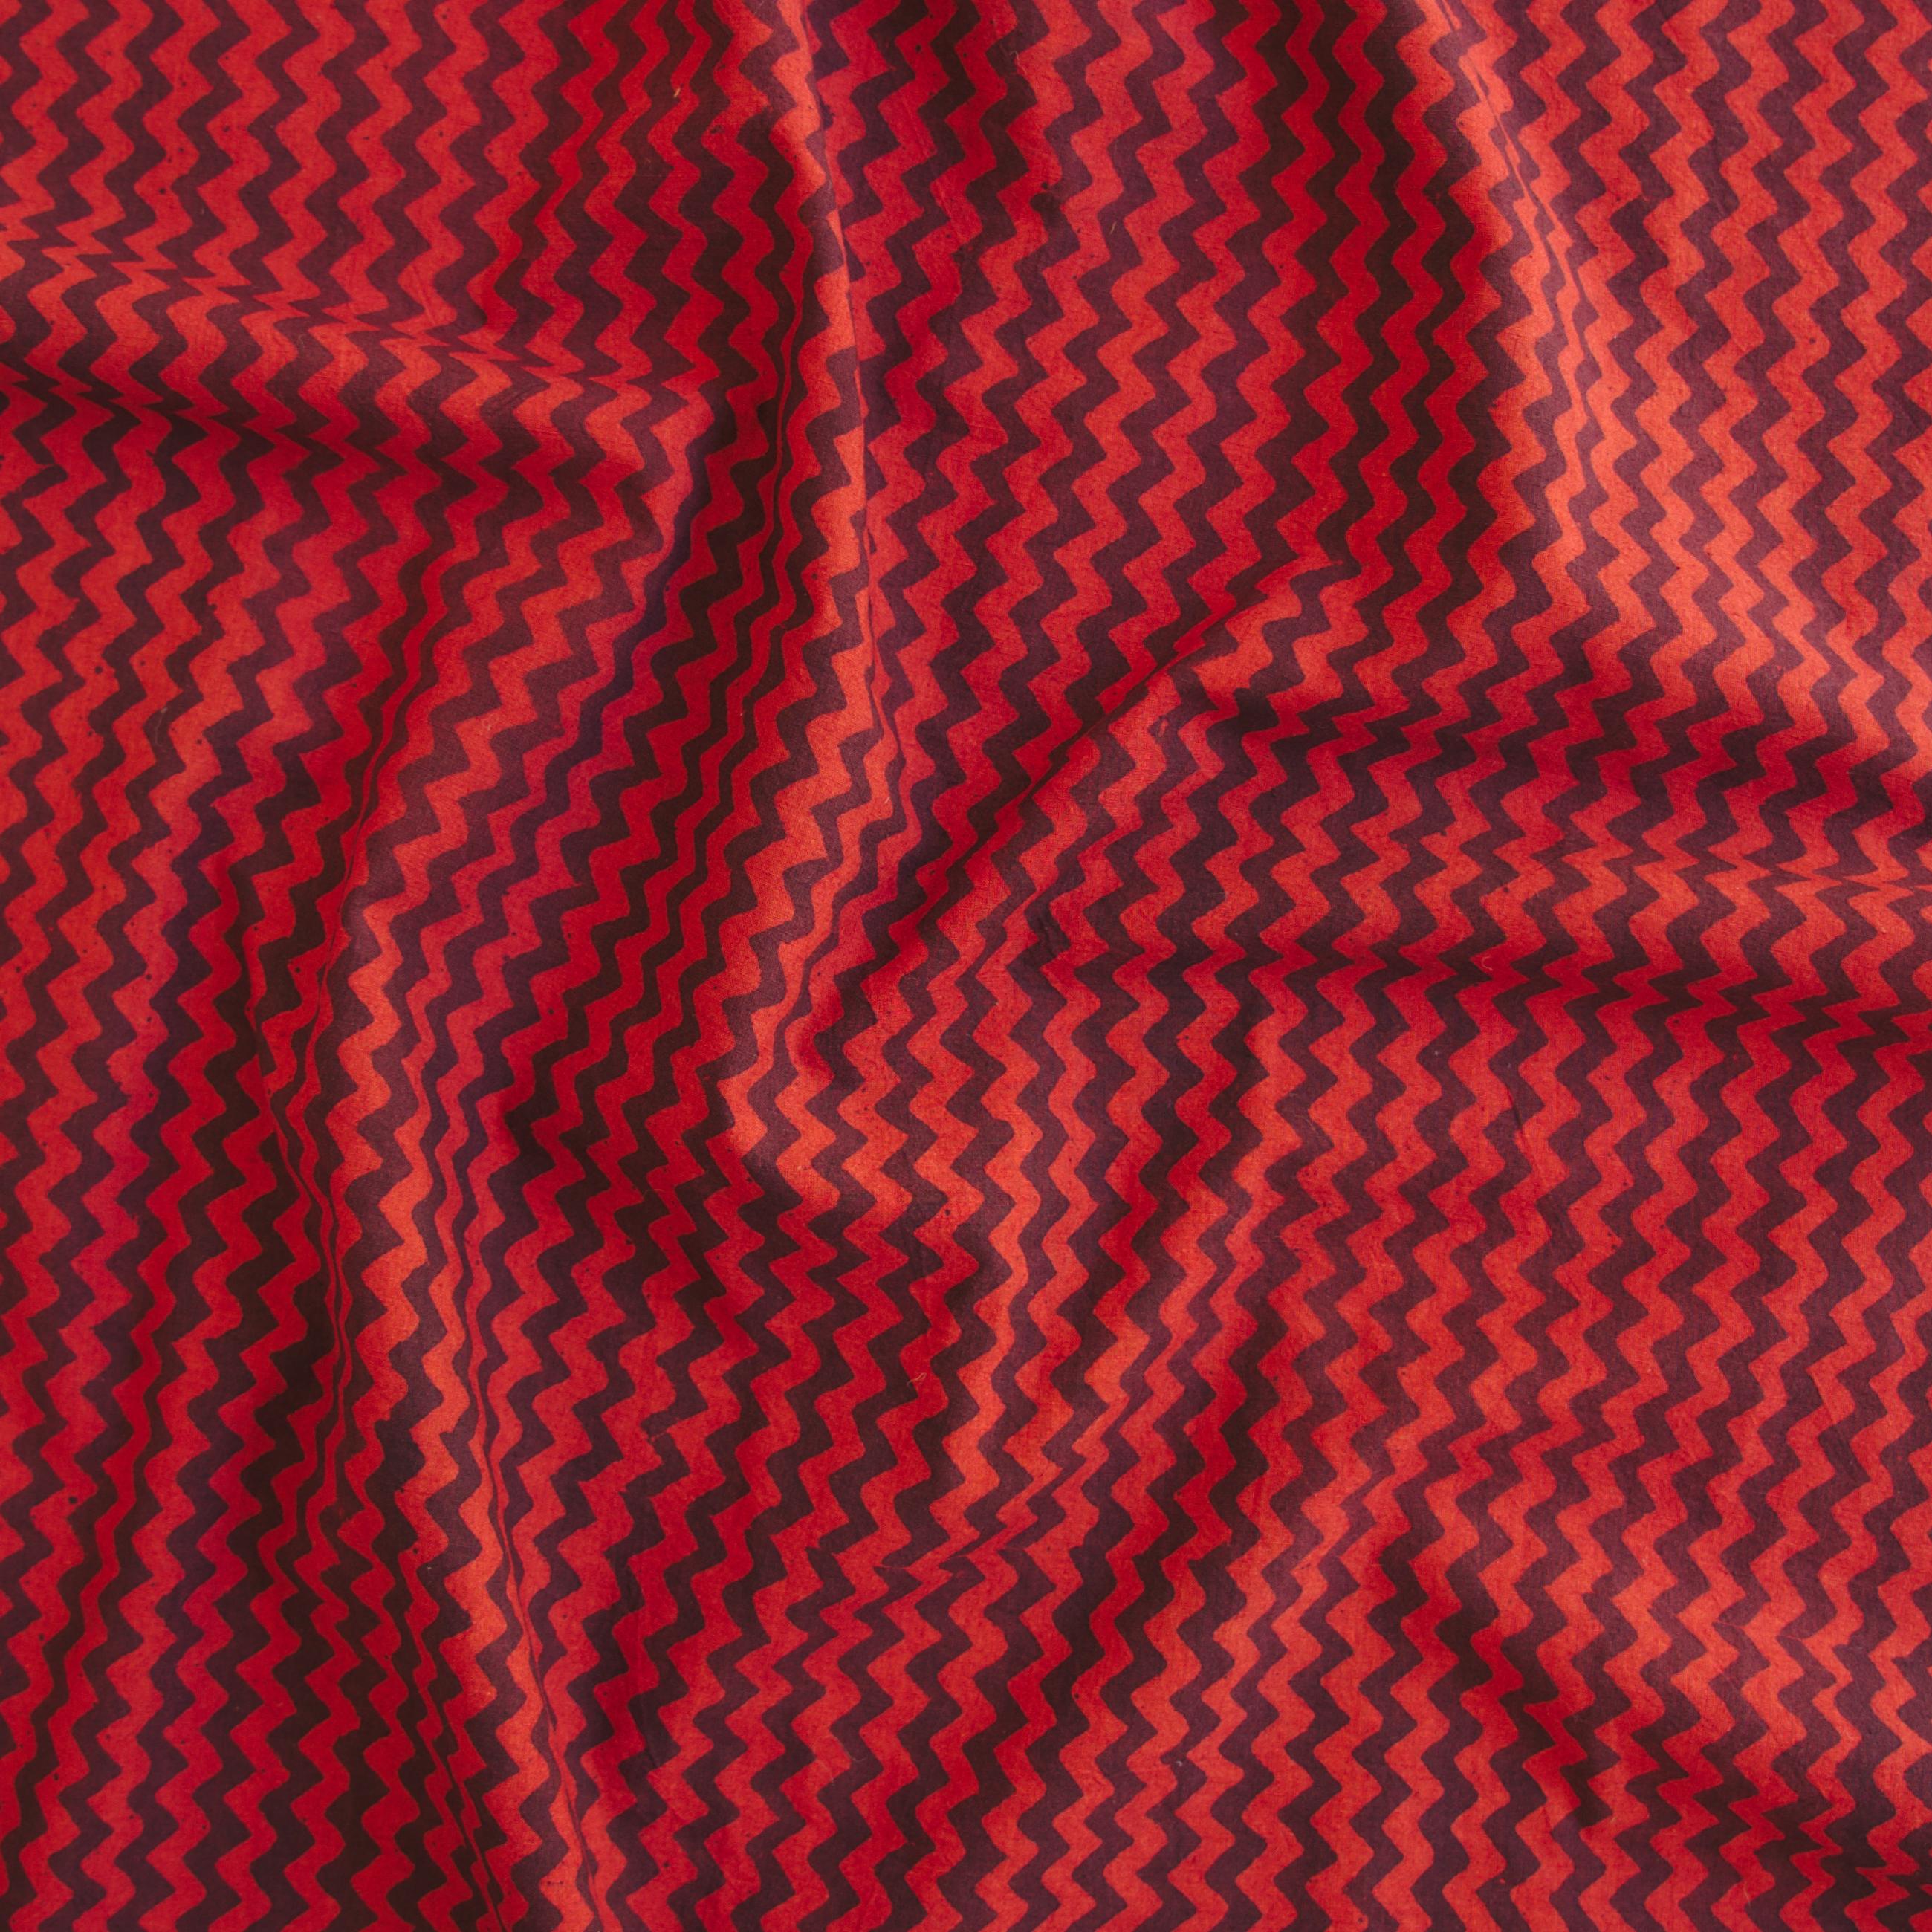 100% Block-Printed Cotton Fabric From India- Ajrak - Alizarin Black ZigZag Print - Contrast